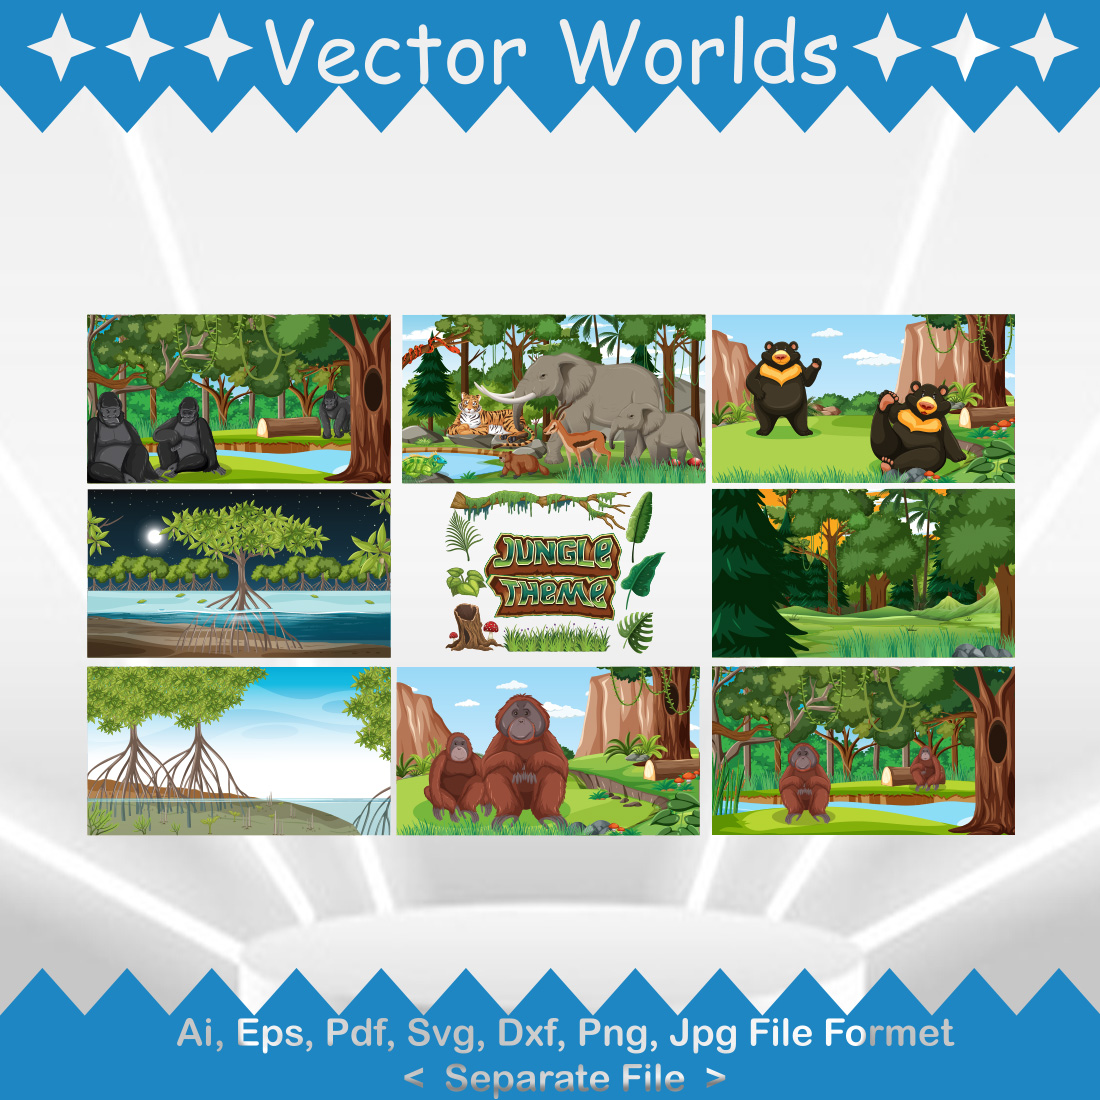 The Jungle SVG Vector Design cover image.